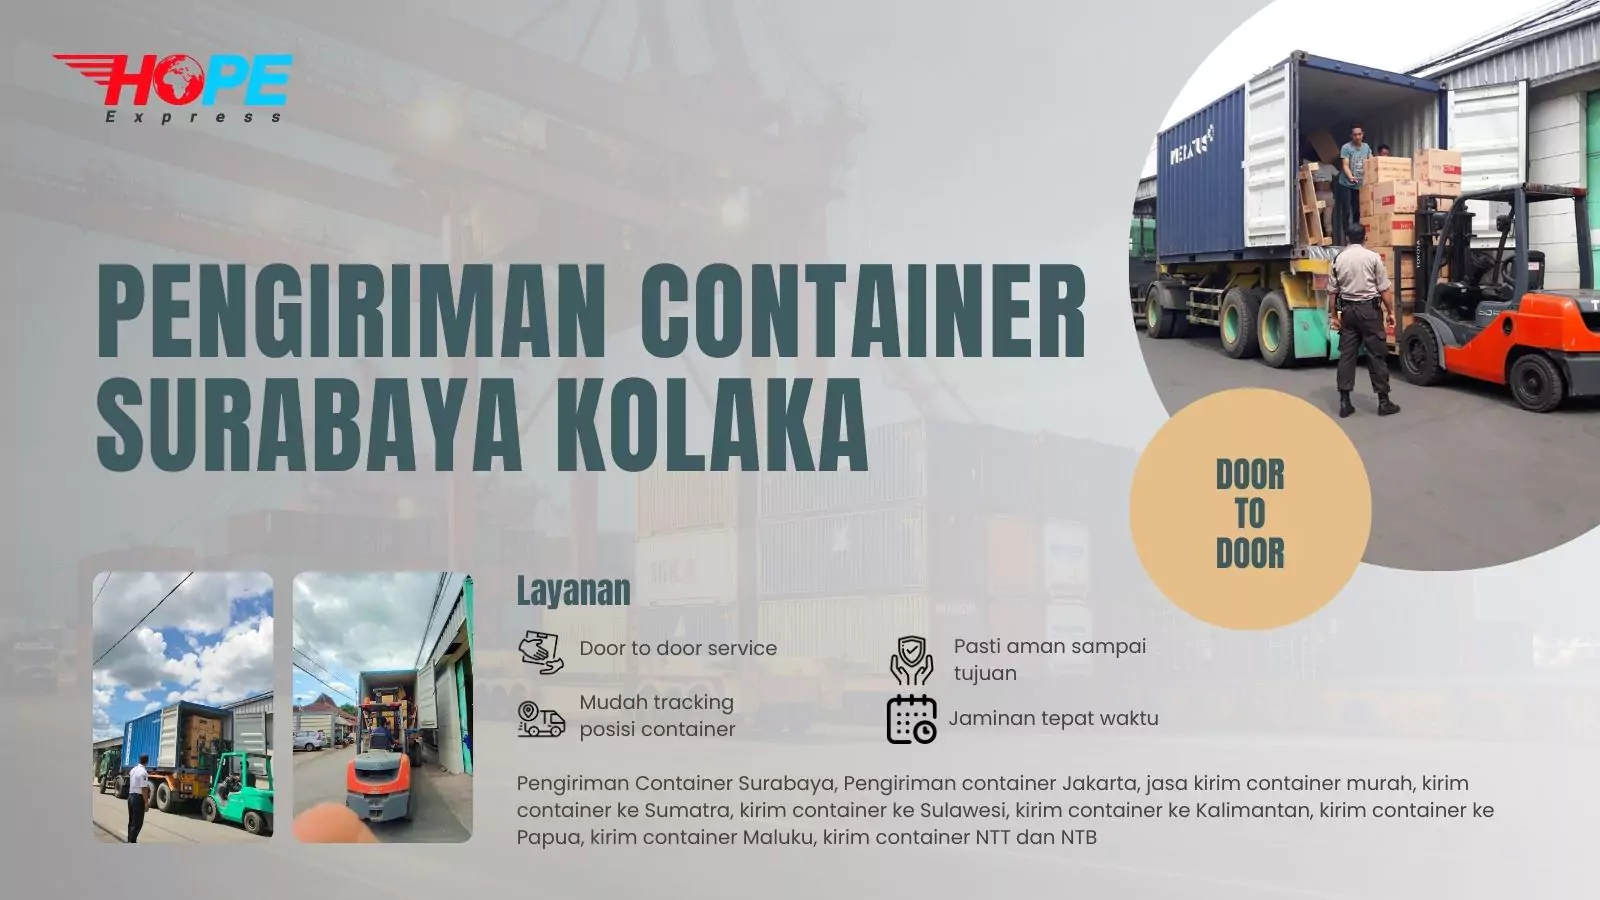 Pengiriman Container Surabaya Kolaka